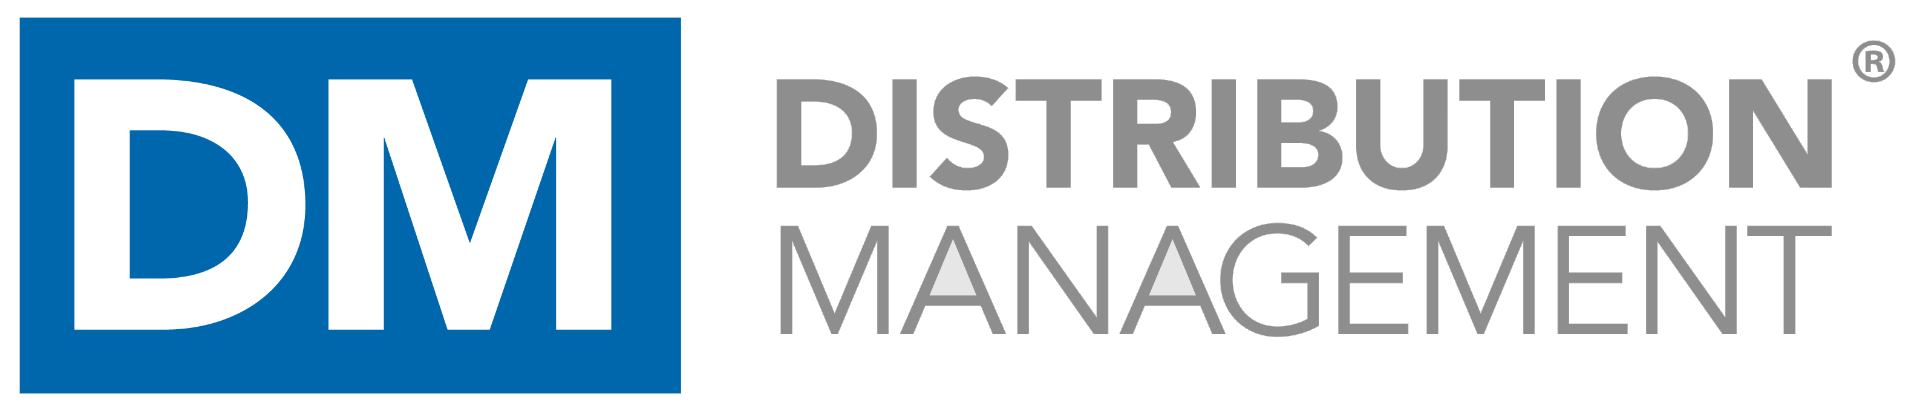 distribution_management